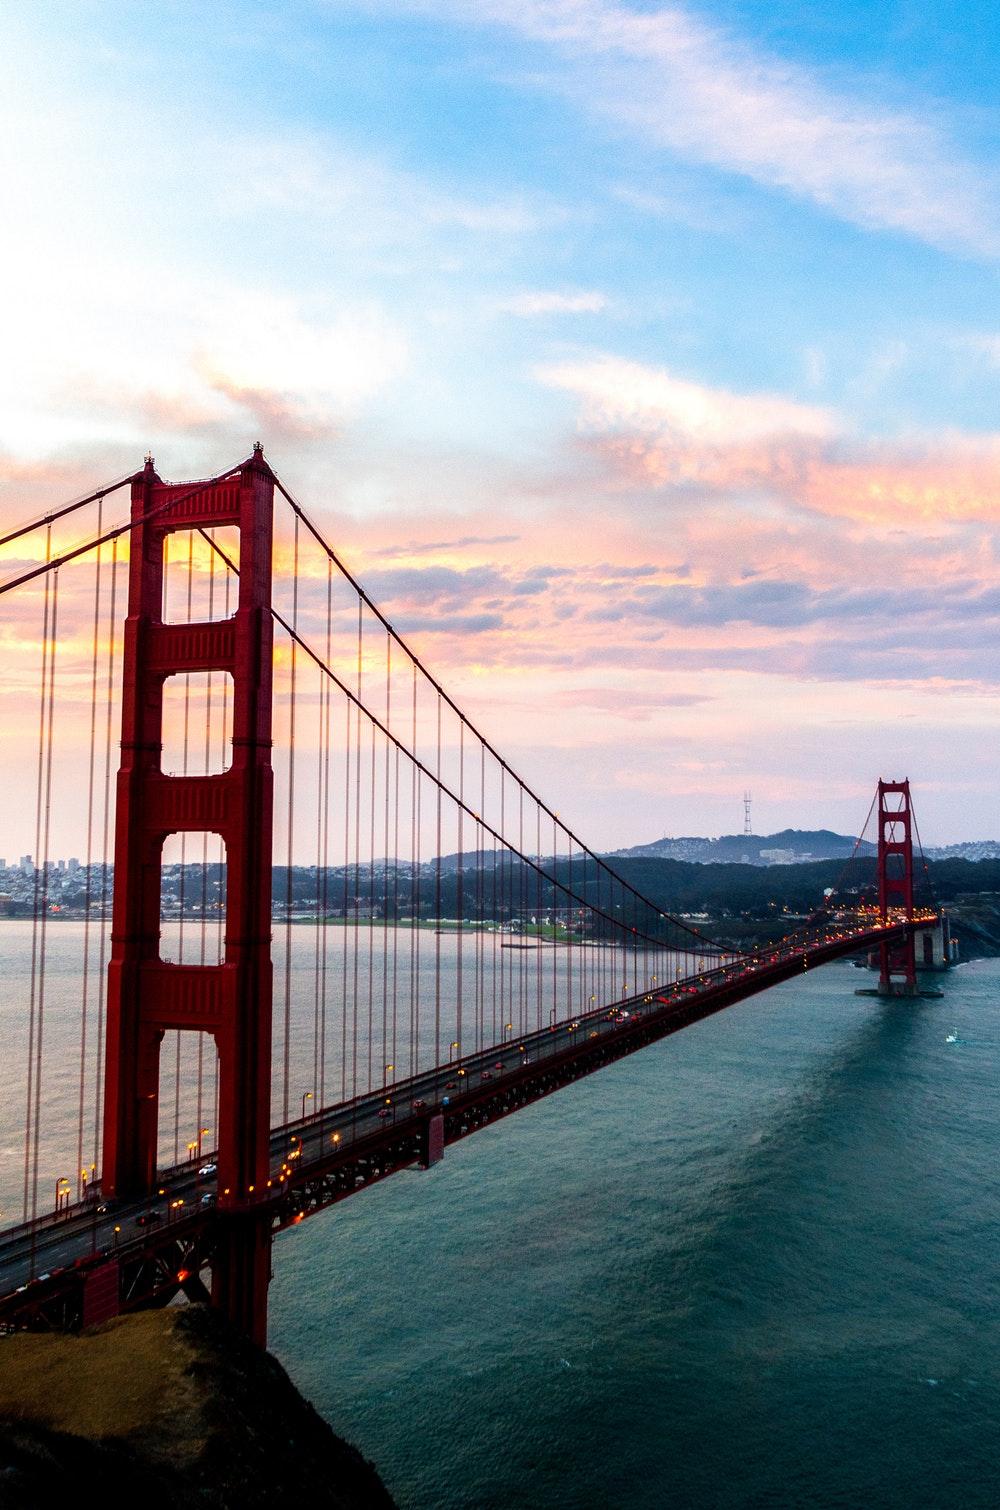 Golden Gate Bridge Picture. Download Free Image